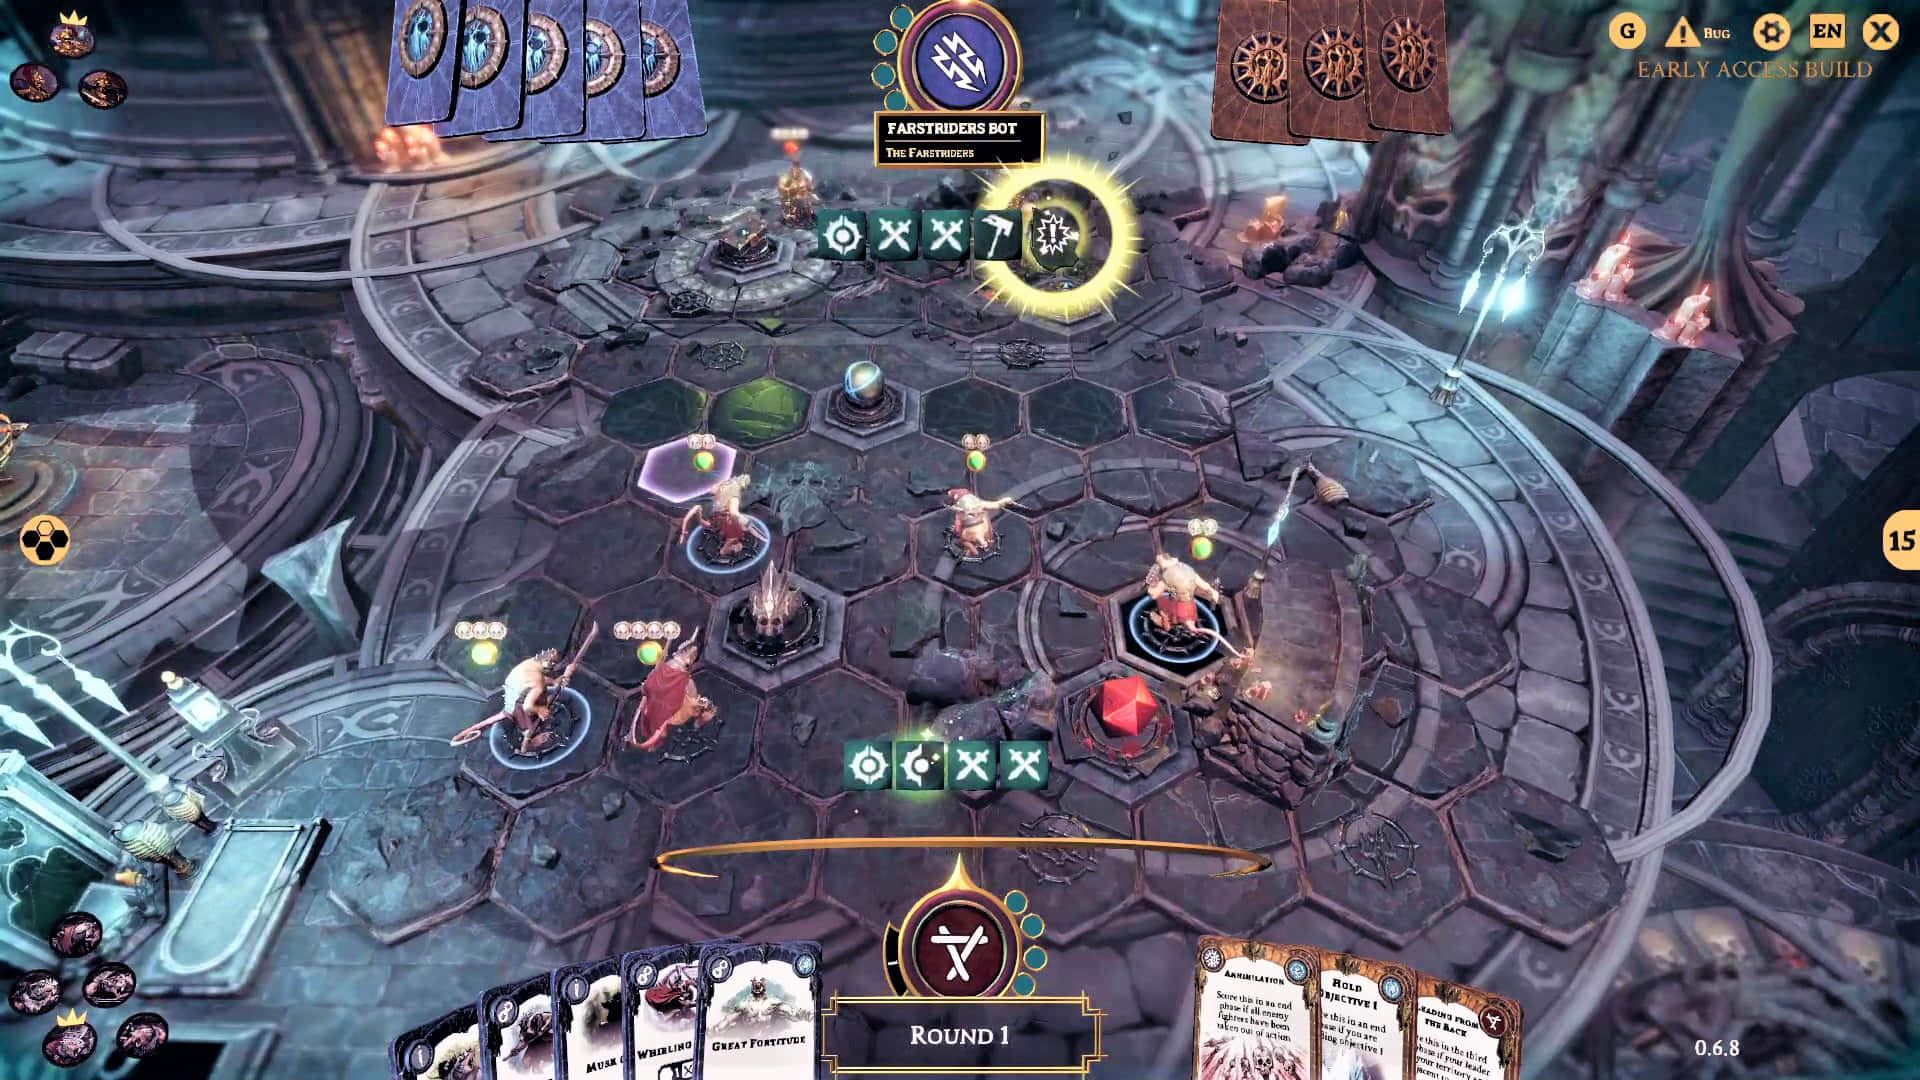 Mystical Battle Scene in Fantasy Game Wallpaper